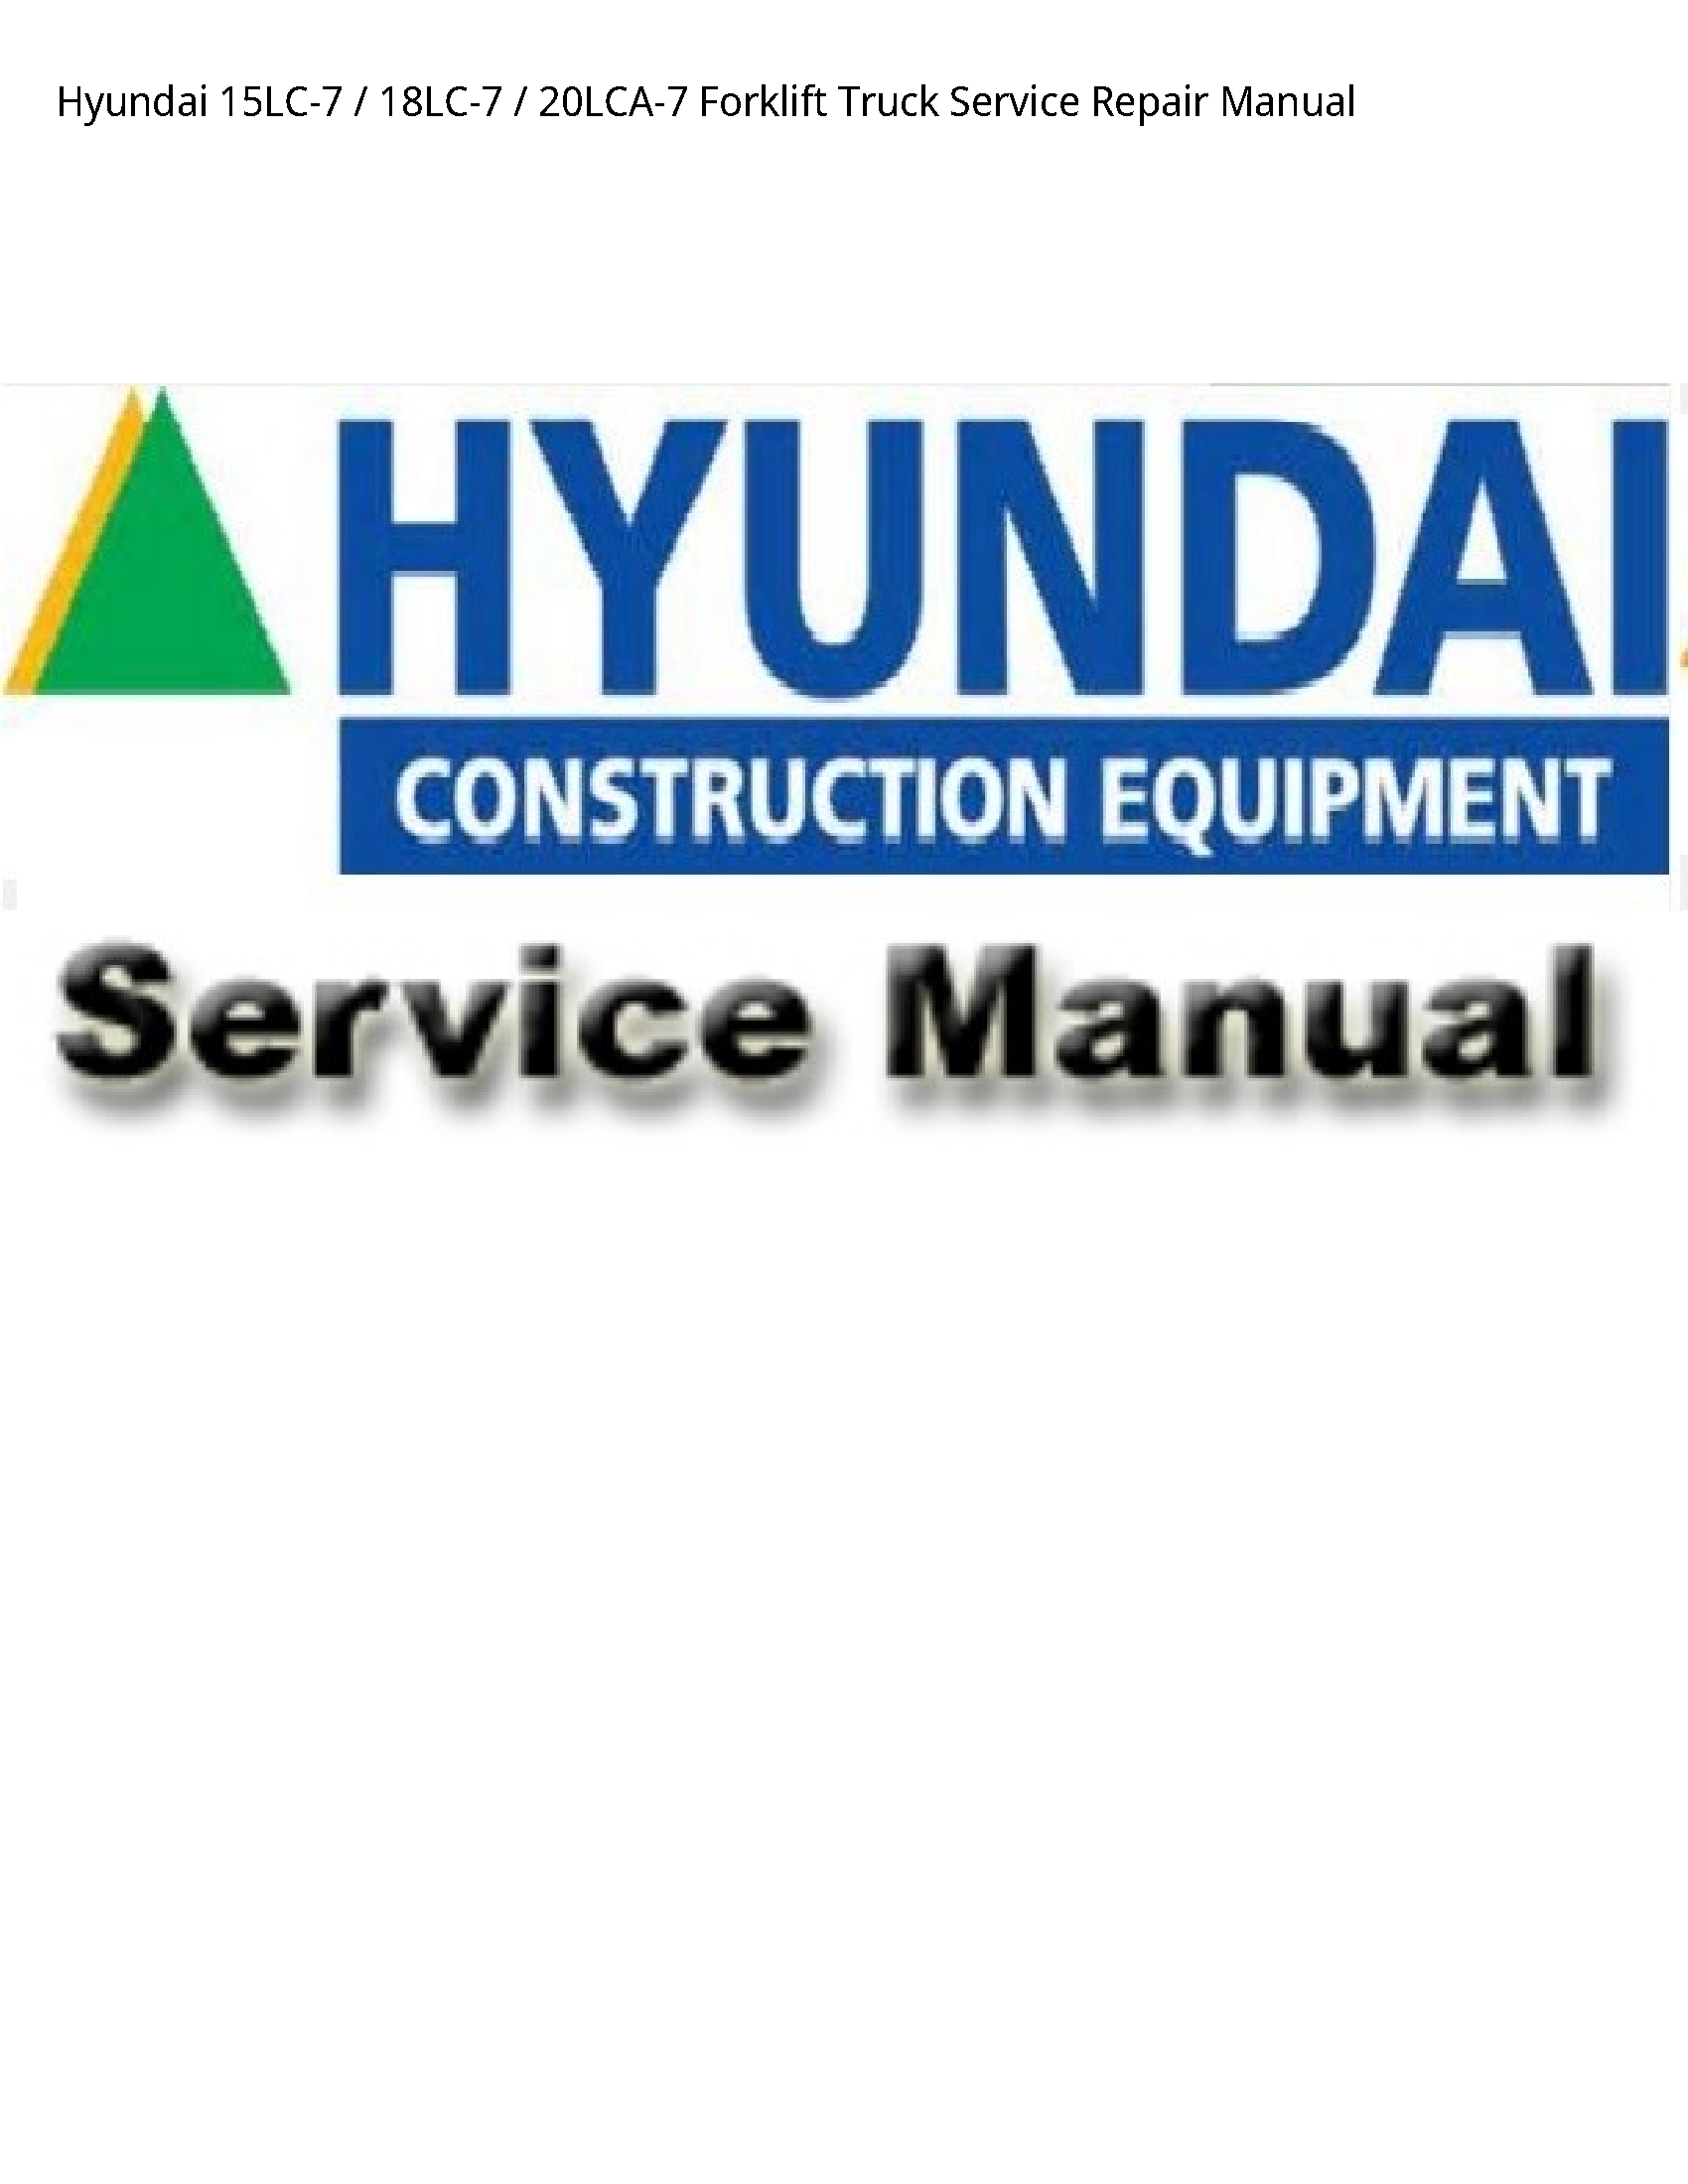 Hyundai 15LC-7 Forklift Truck manual